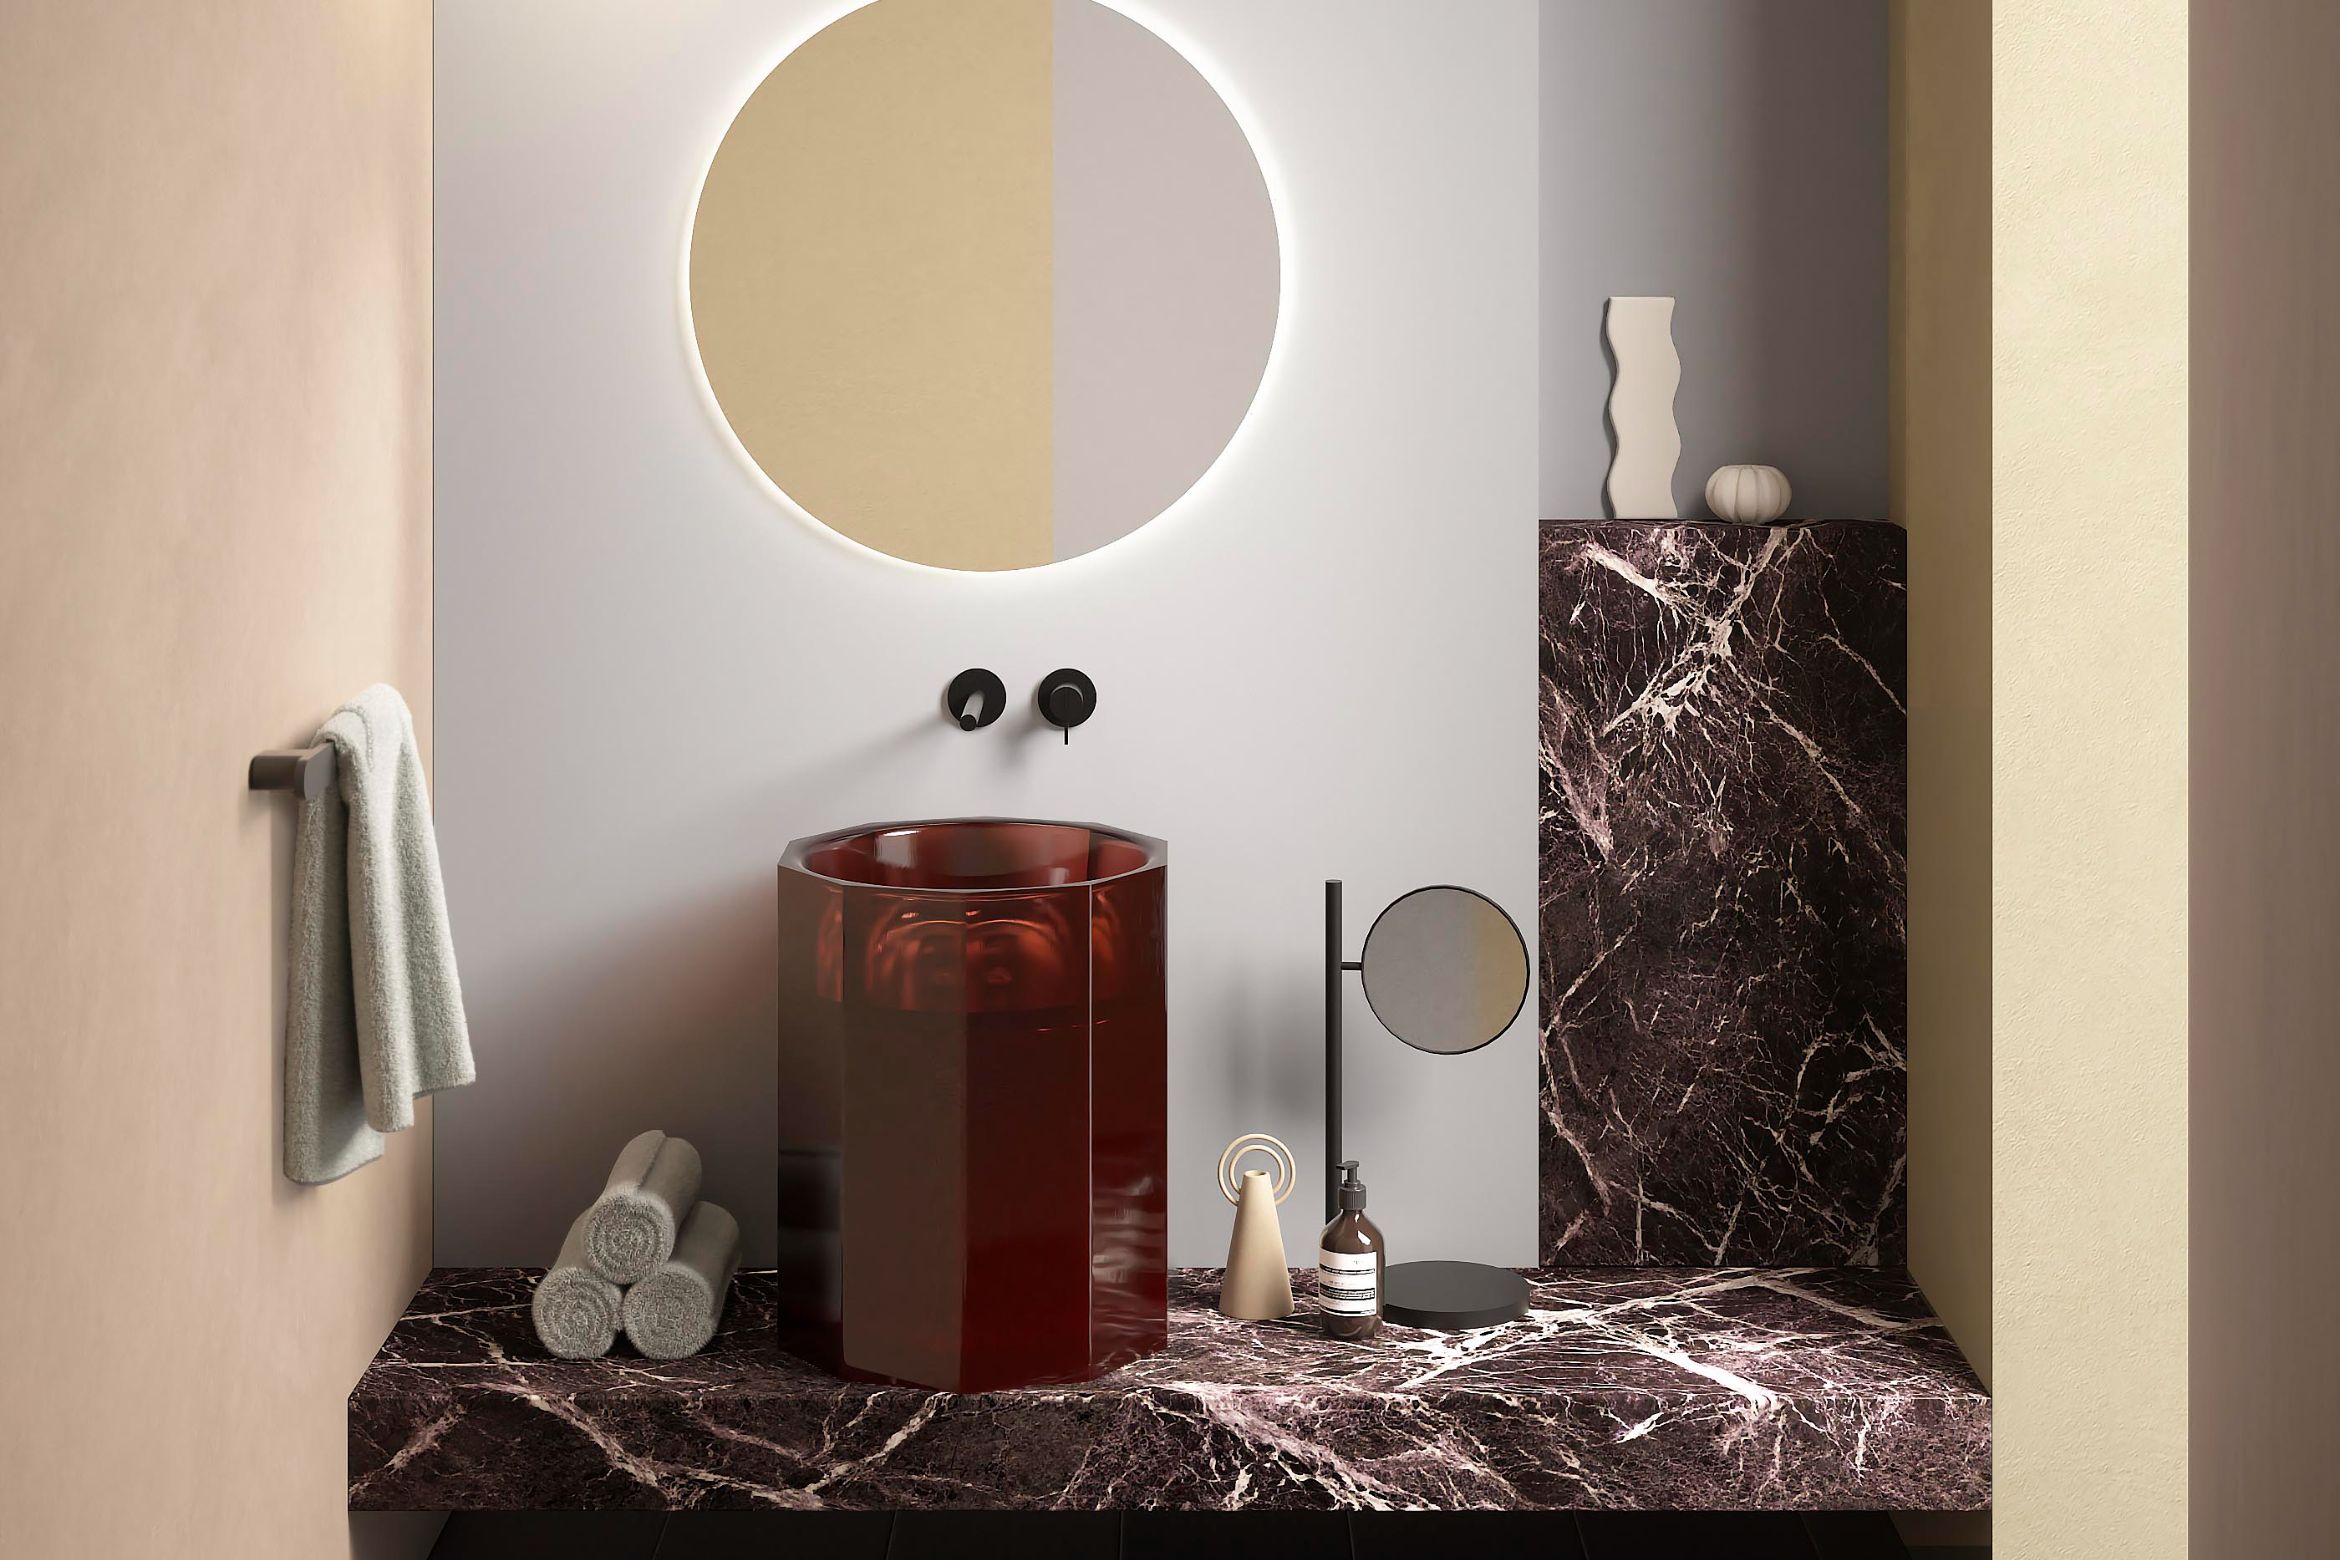 This monolithic modular system brings classic Italian architecture to bathroom design